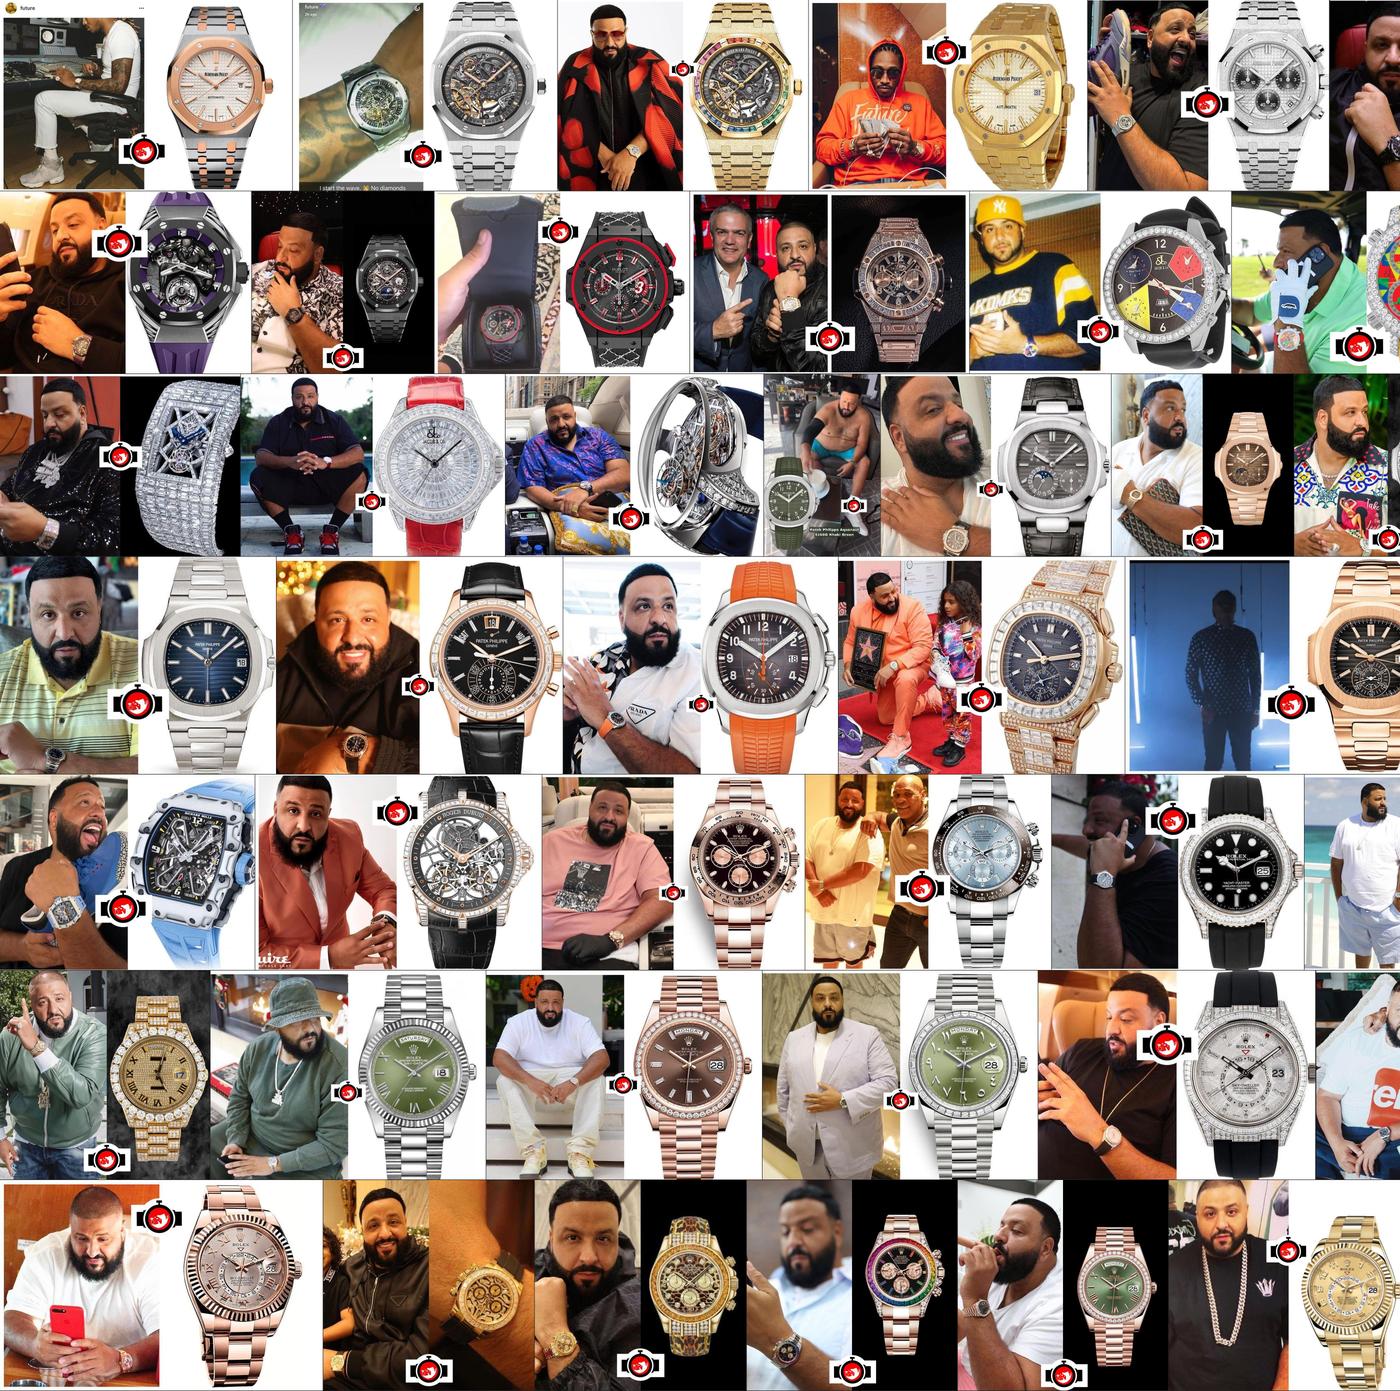 DJ Khaled's Exquisite Watch Collection - From Audemars Piguet to Rolex